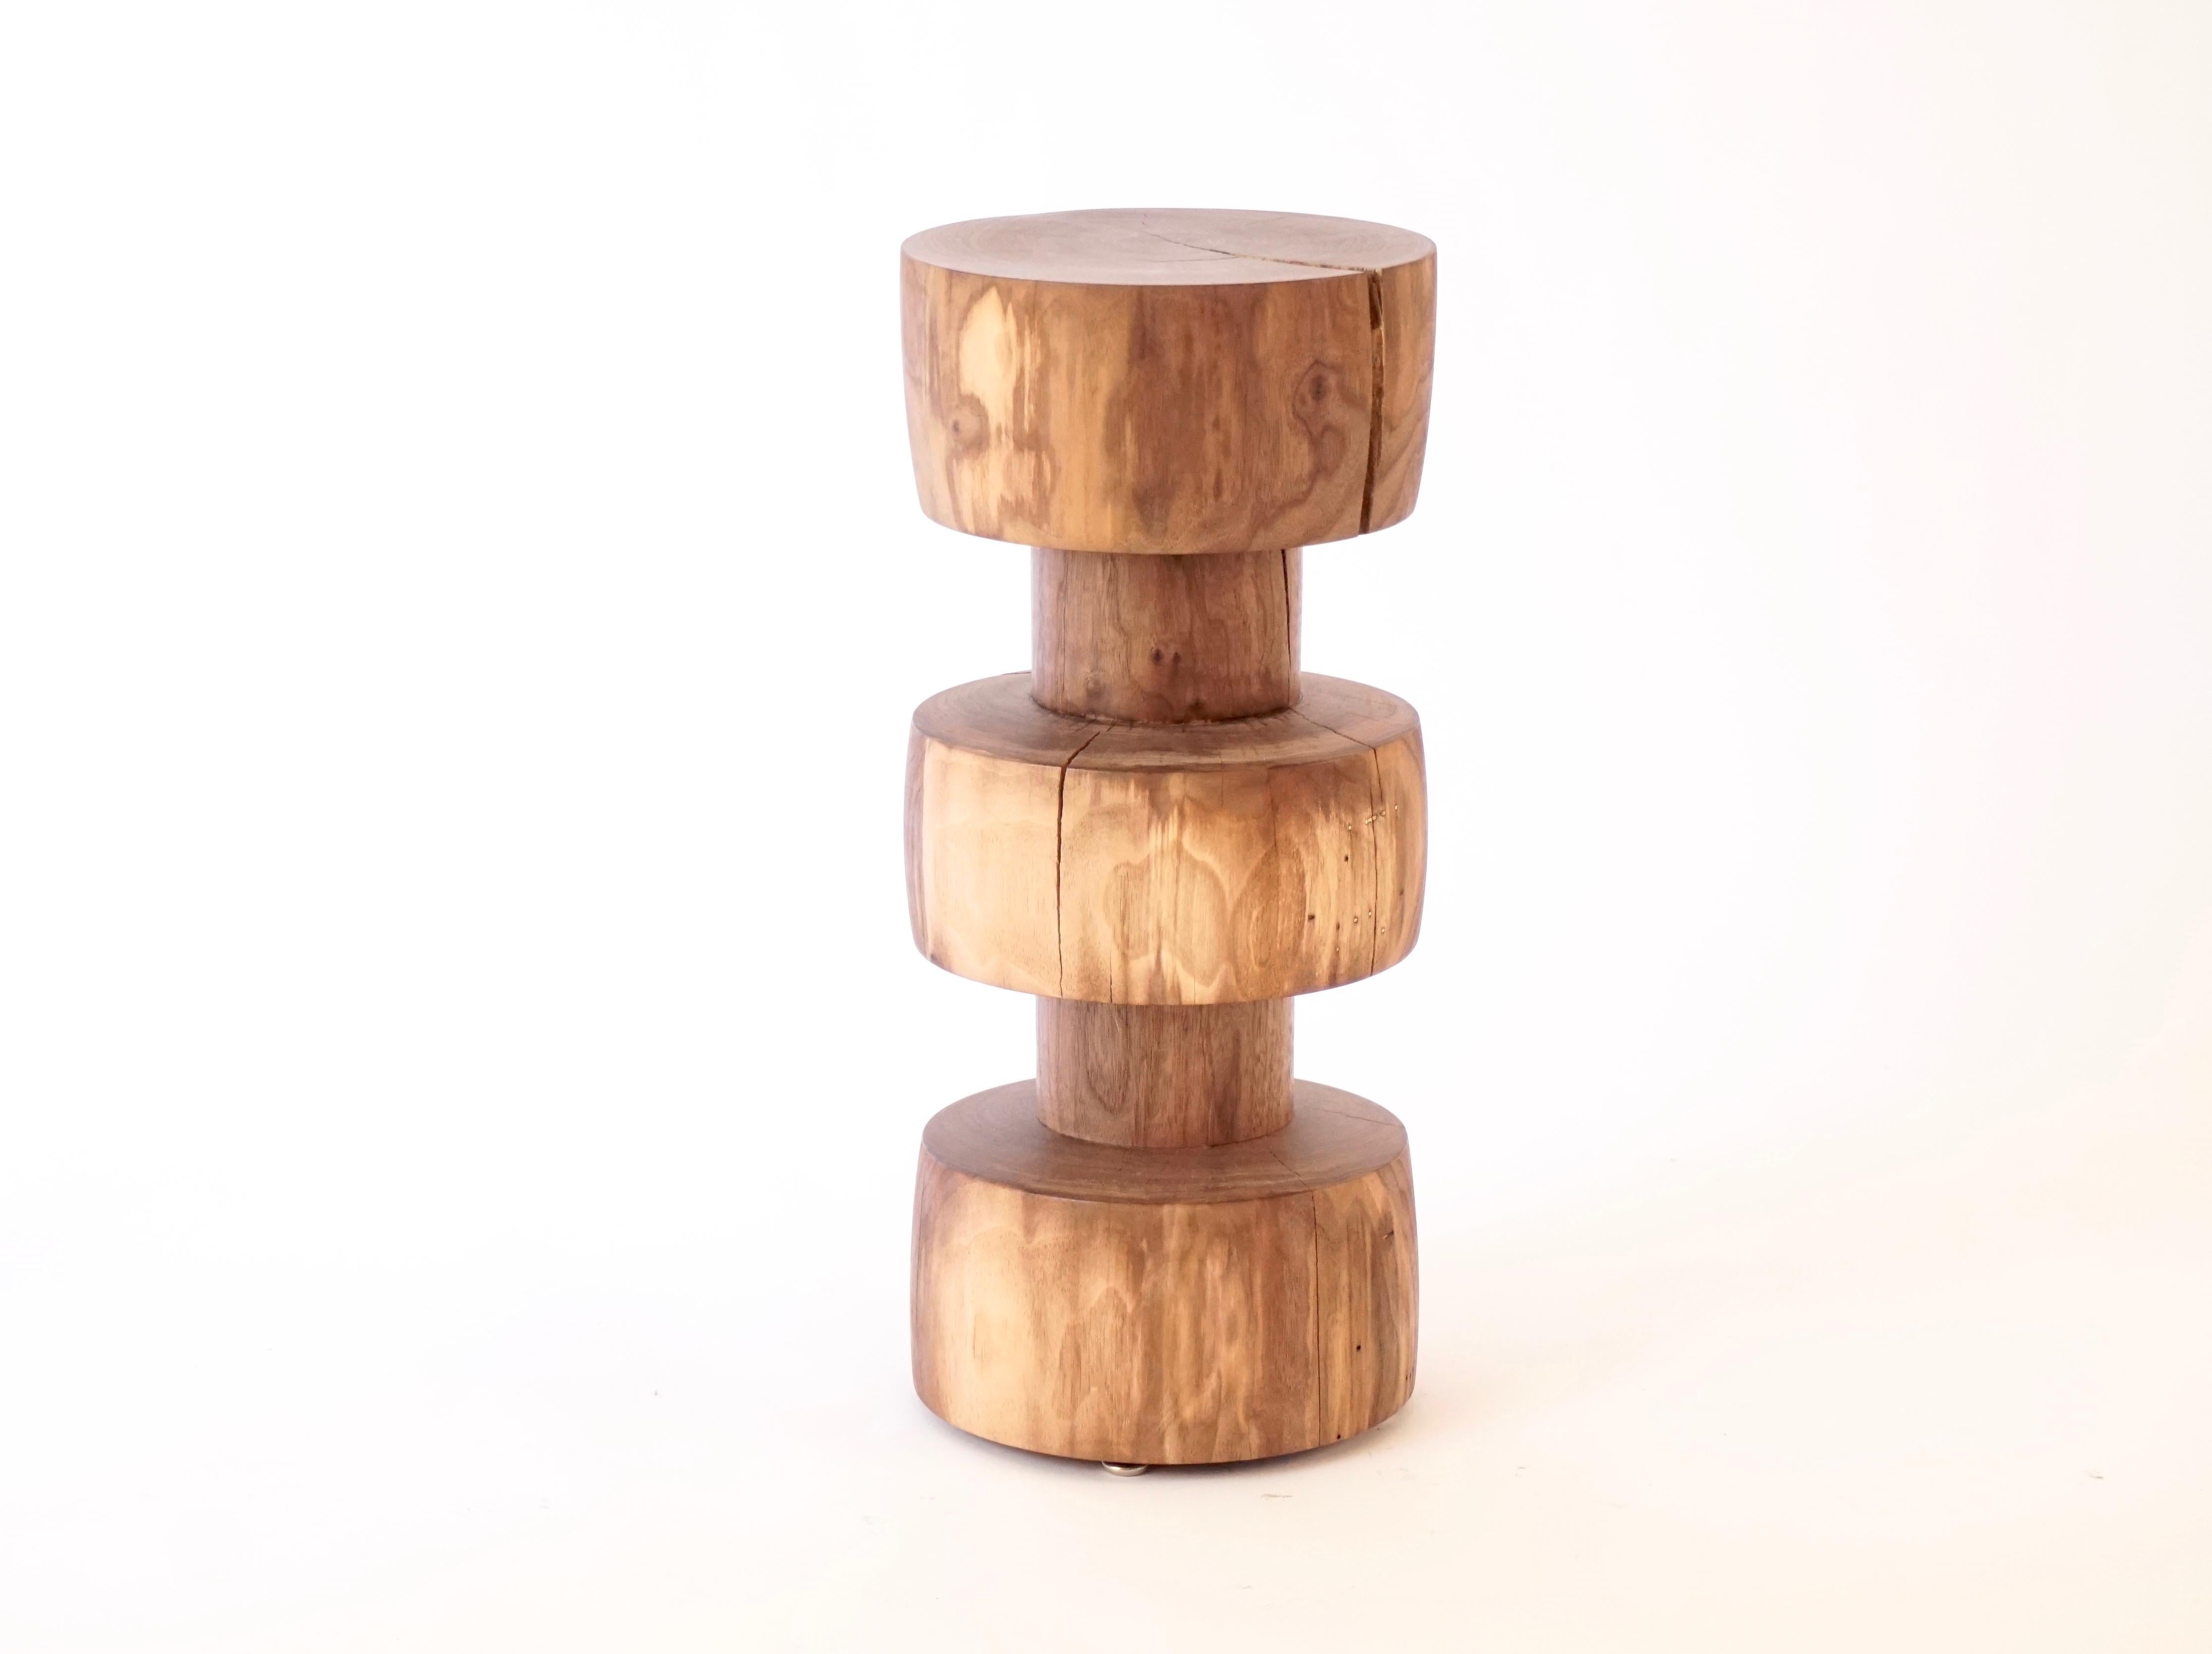 American Turned Wooden Mini-Pedestal Table #4 in Walnut